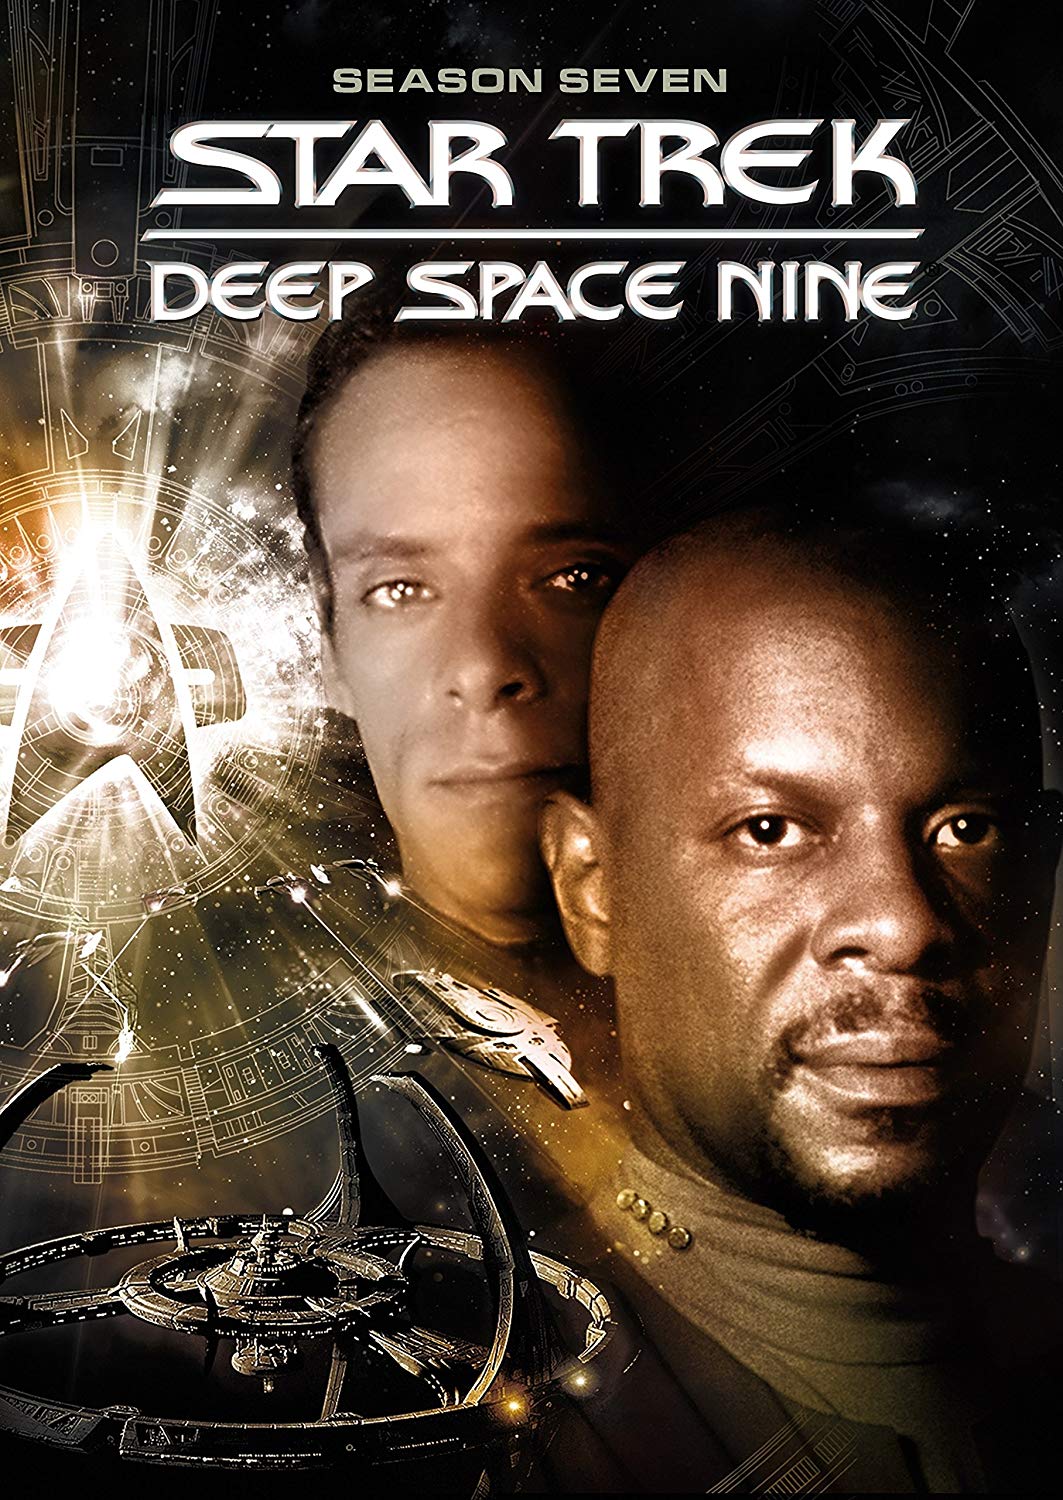 Star Trek – Deep Space Nine